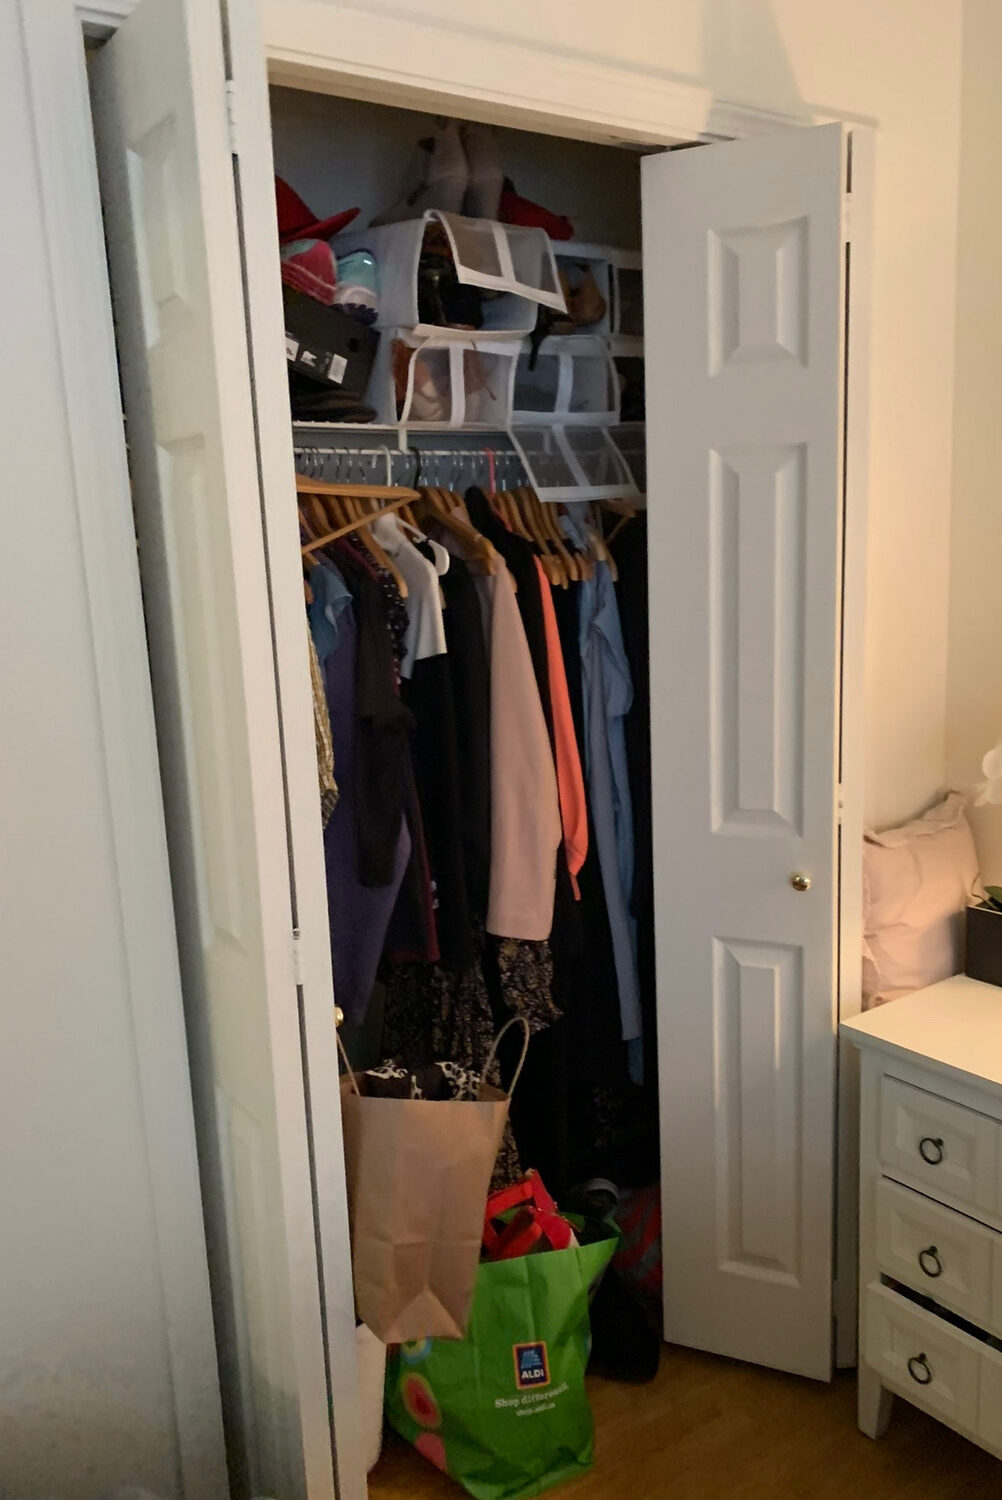 A messy closet